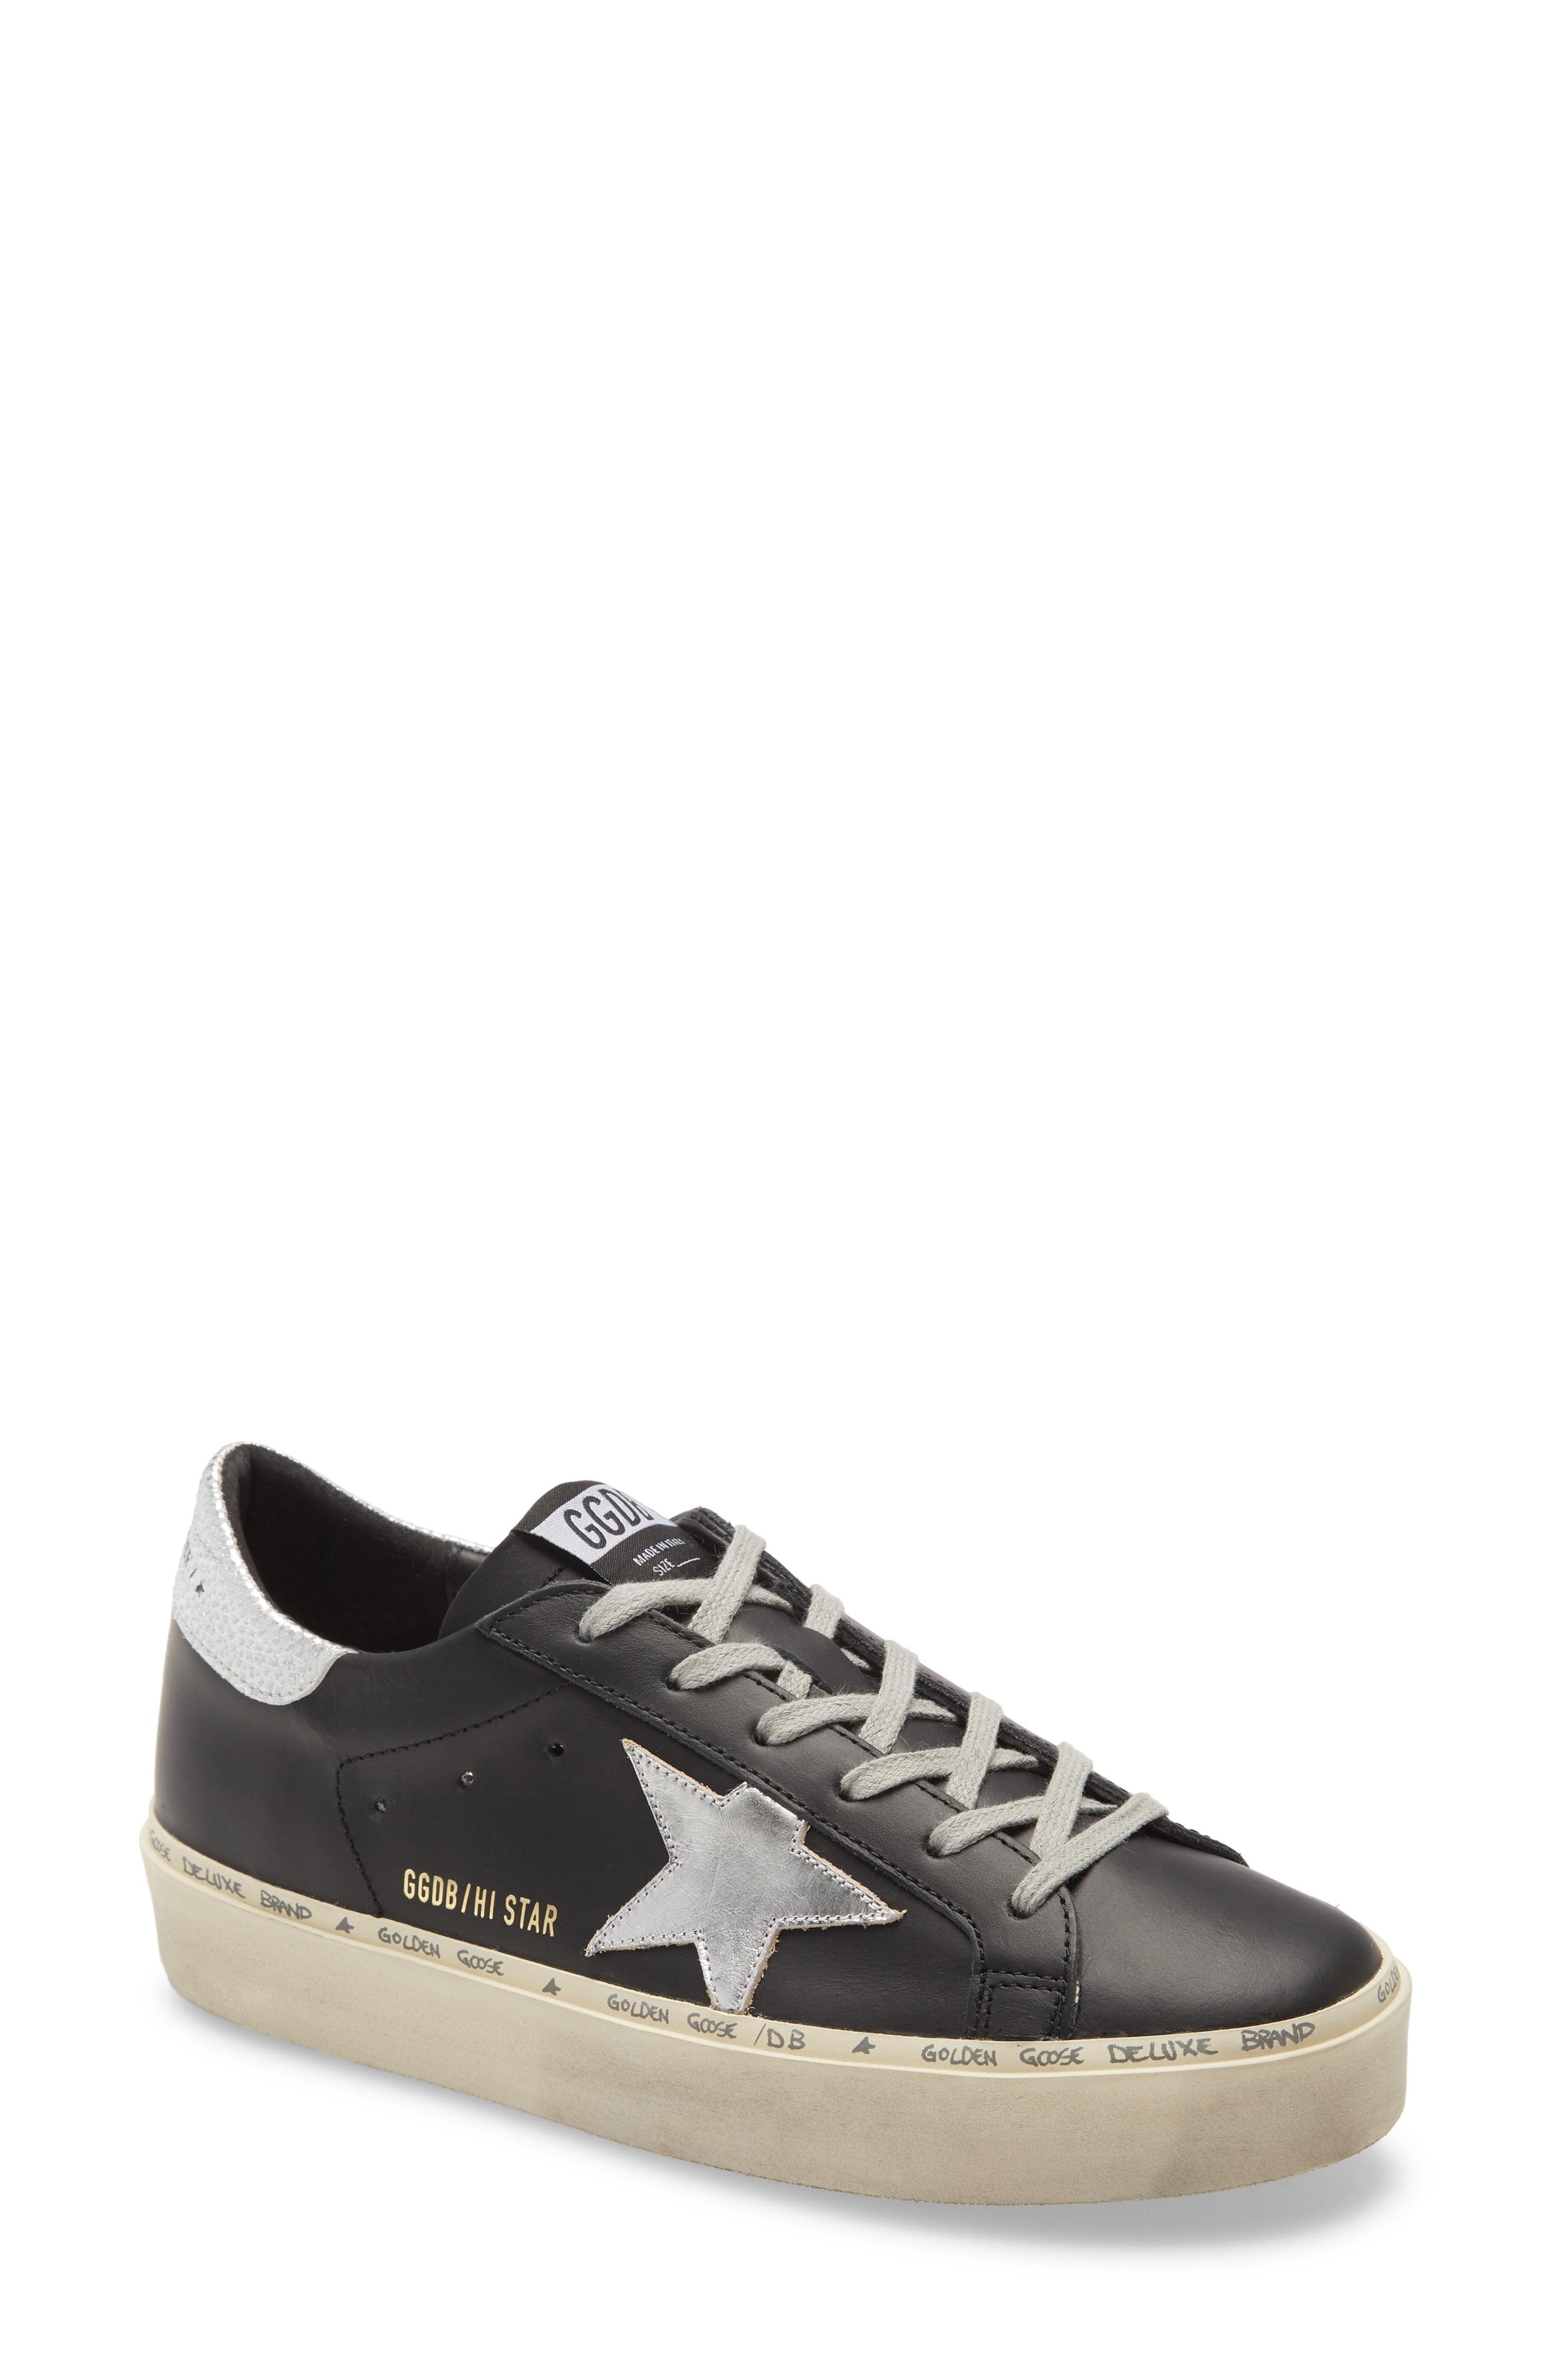 Golden Goose Deluxe Brand Hi Star Platform Sneaker in Black Leather ...